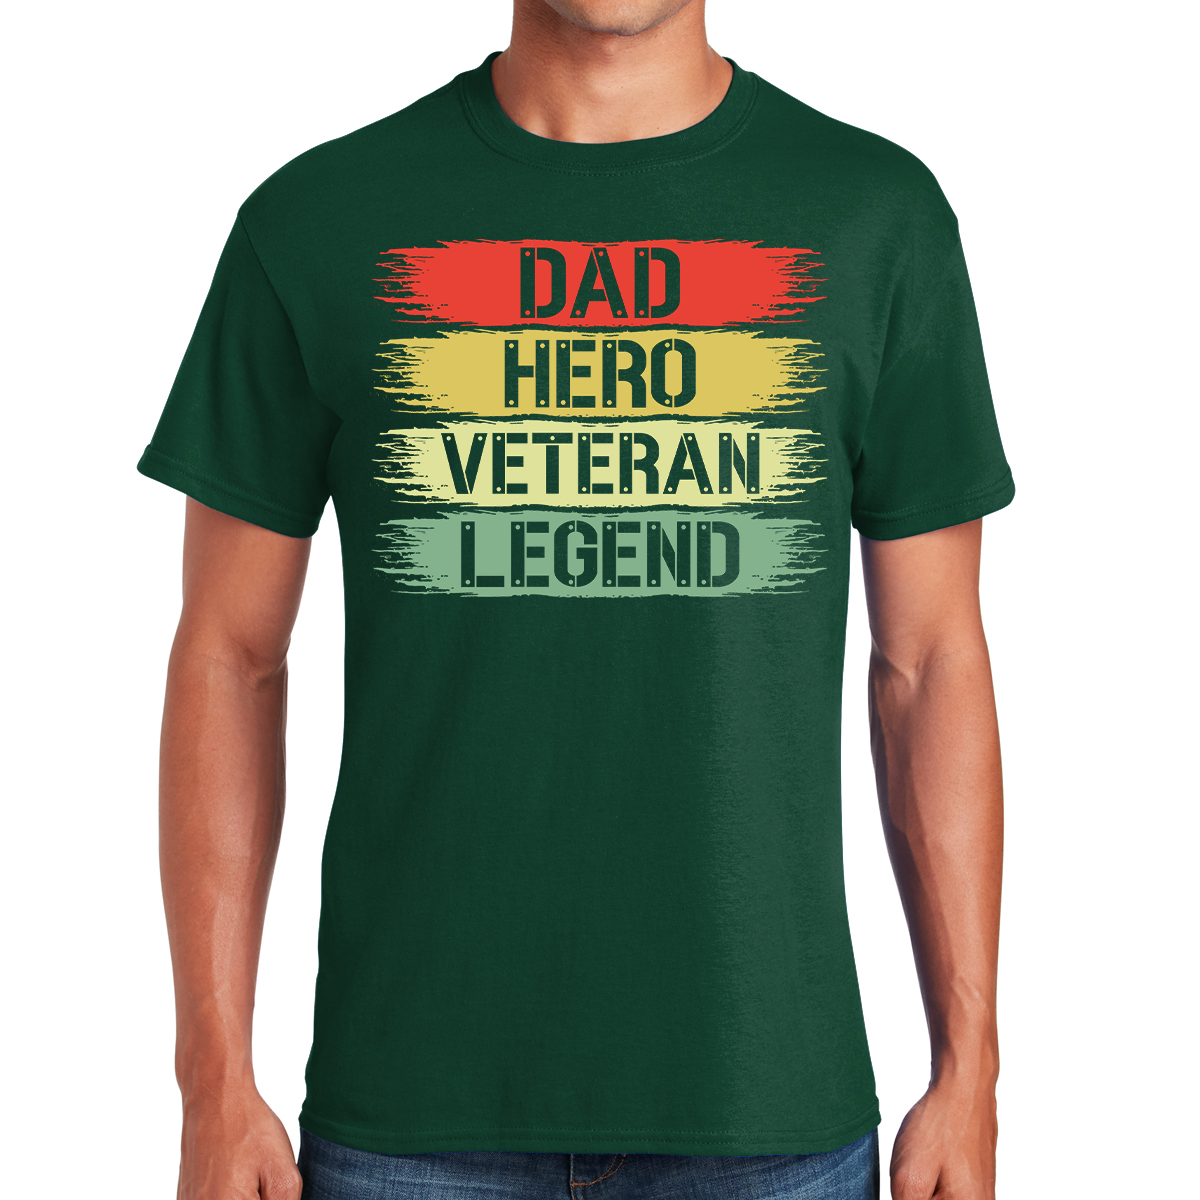 Dad Hero Veteran Legend Saluting The Legacy Awesome Dad T-shirt